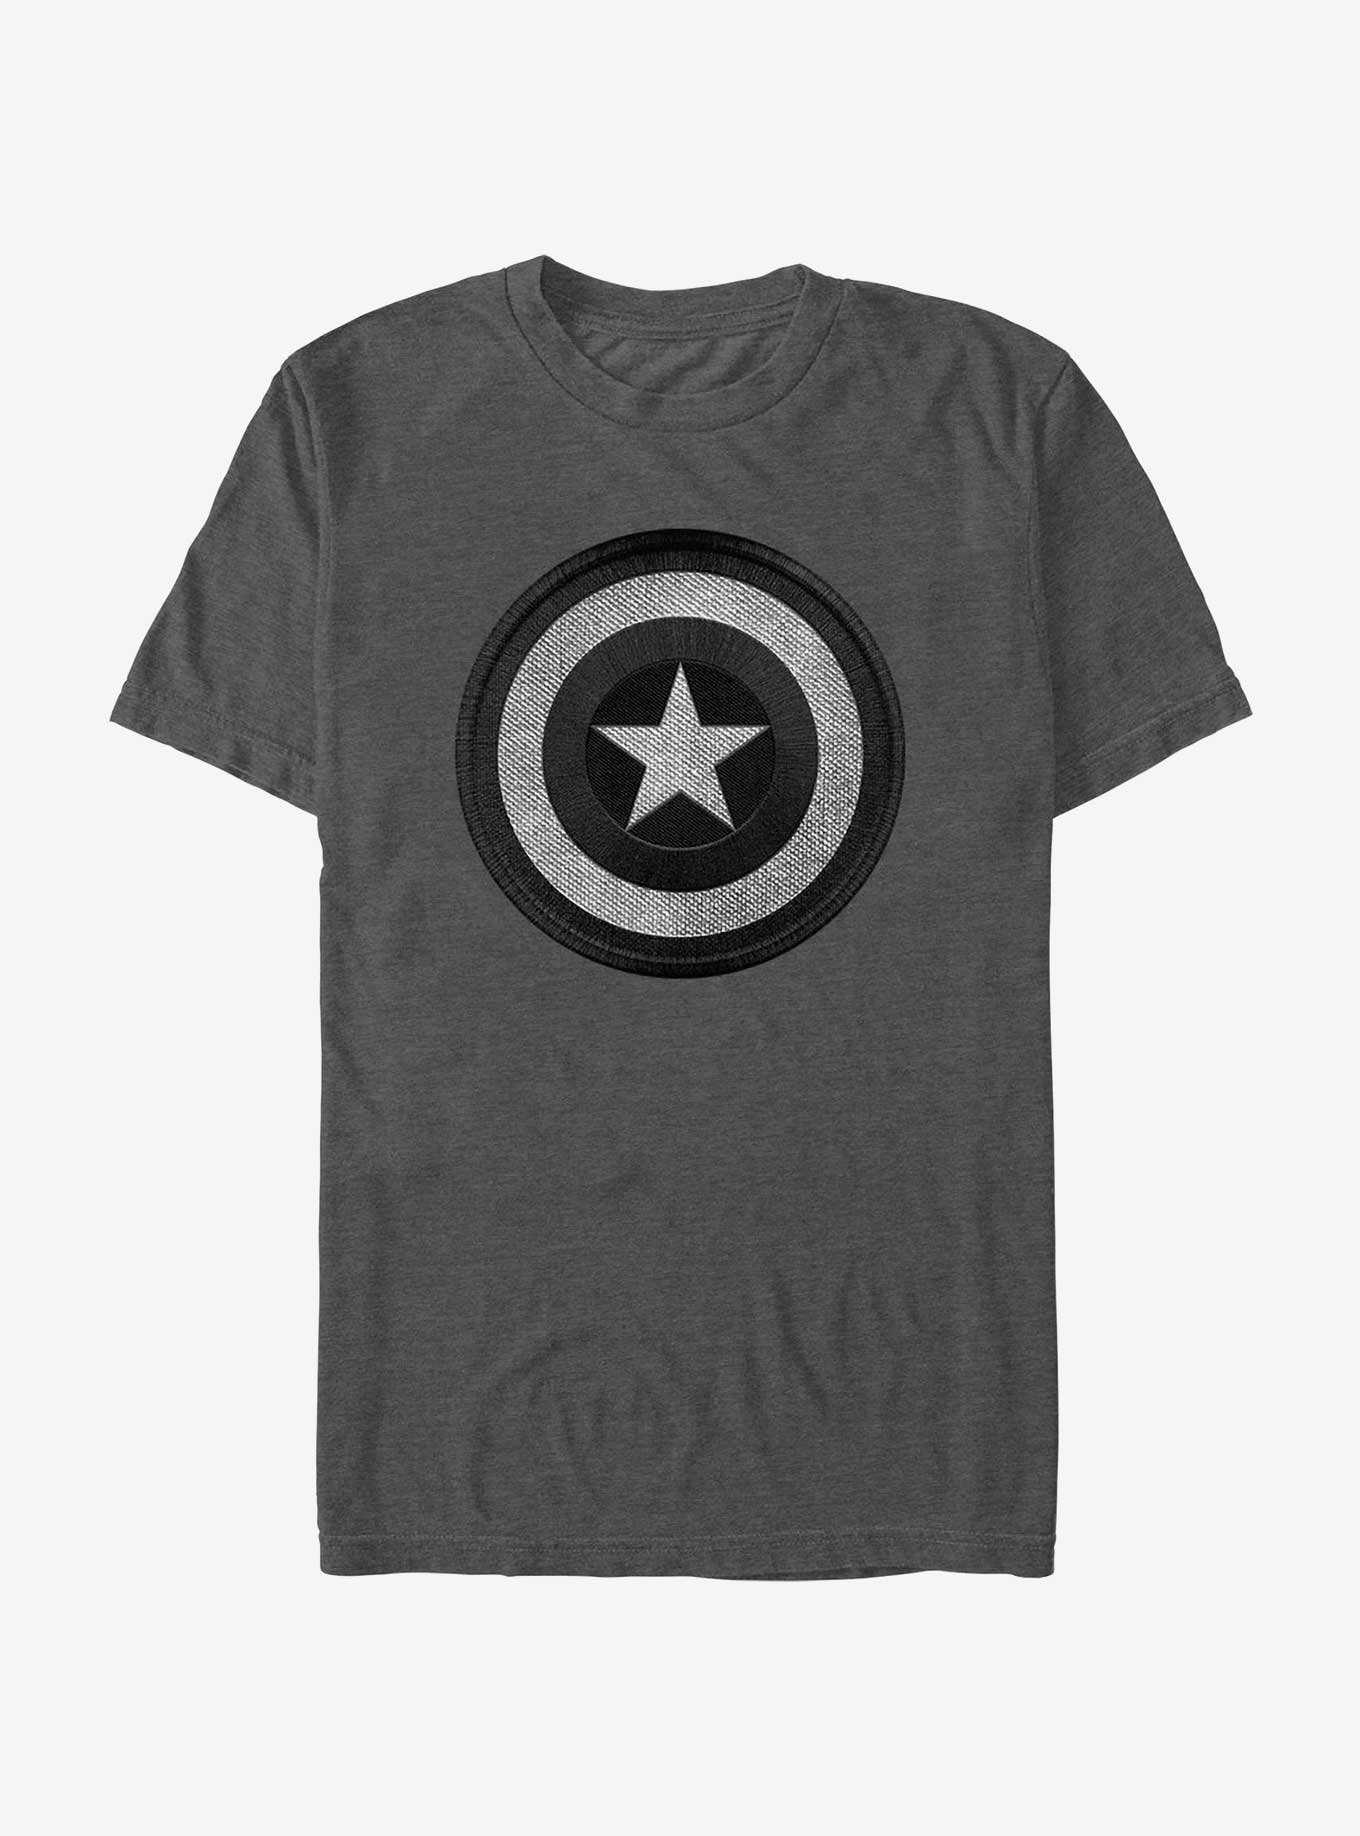 Marvel Captain America Patchy Shield T-Shirt, , hi-res